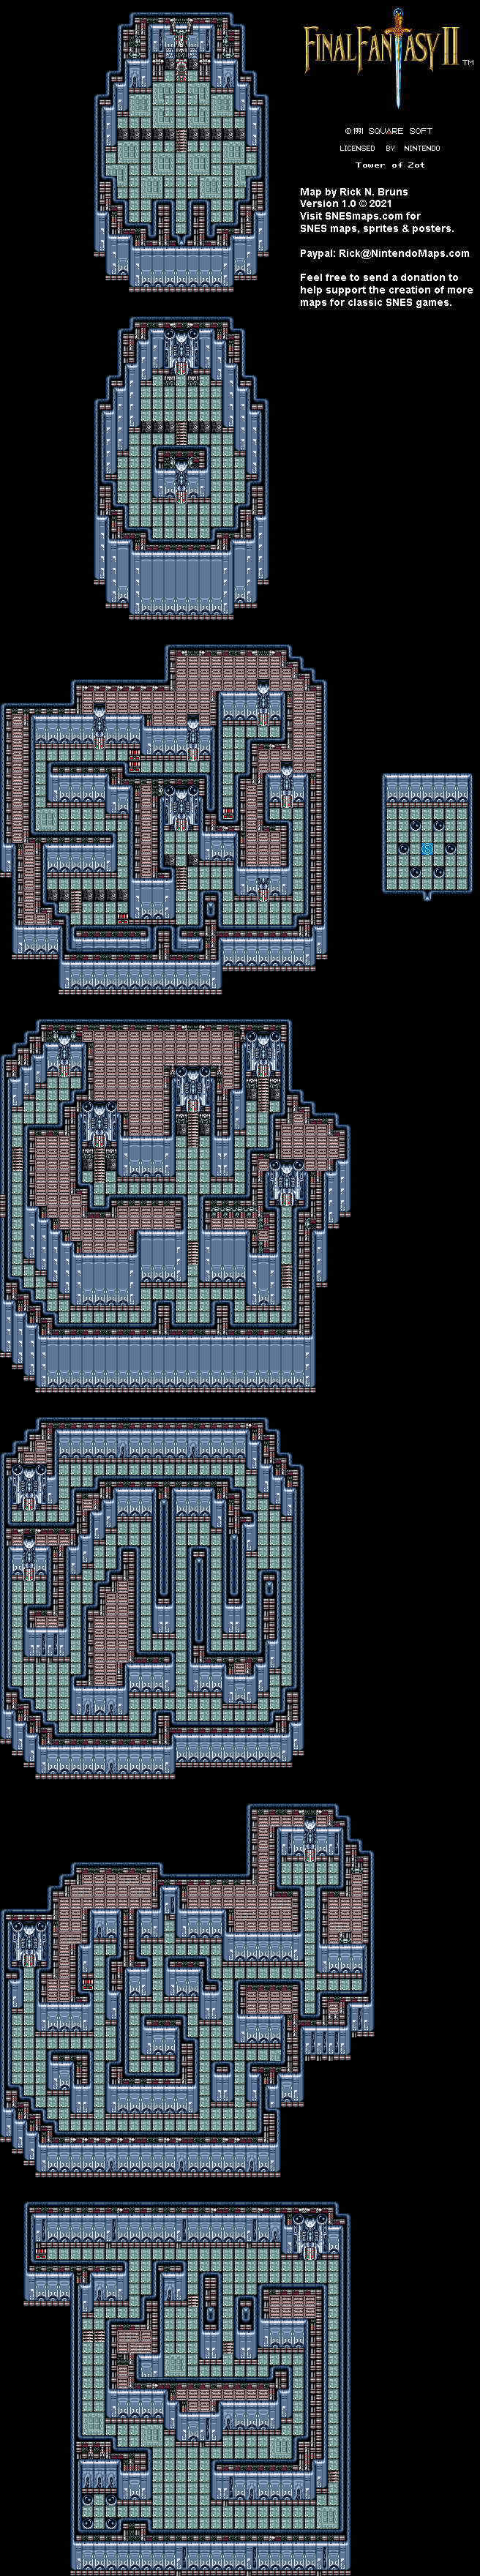 Final Fantasy II 2 (IV 4) - Tower of Zot Super Nintendo SNES Map BG